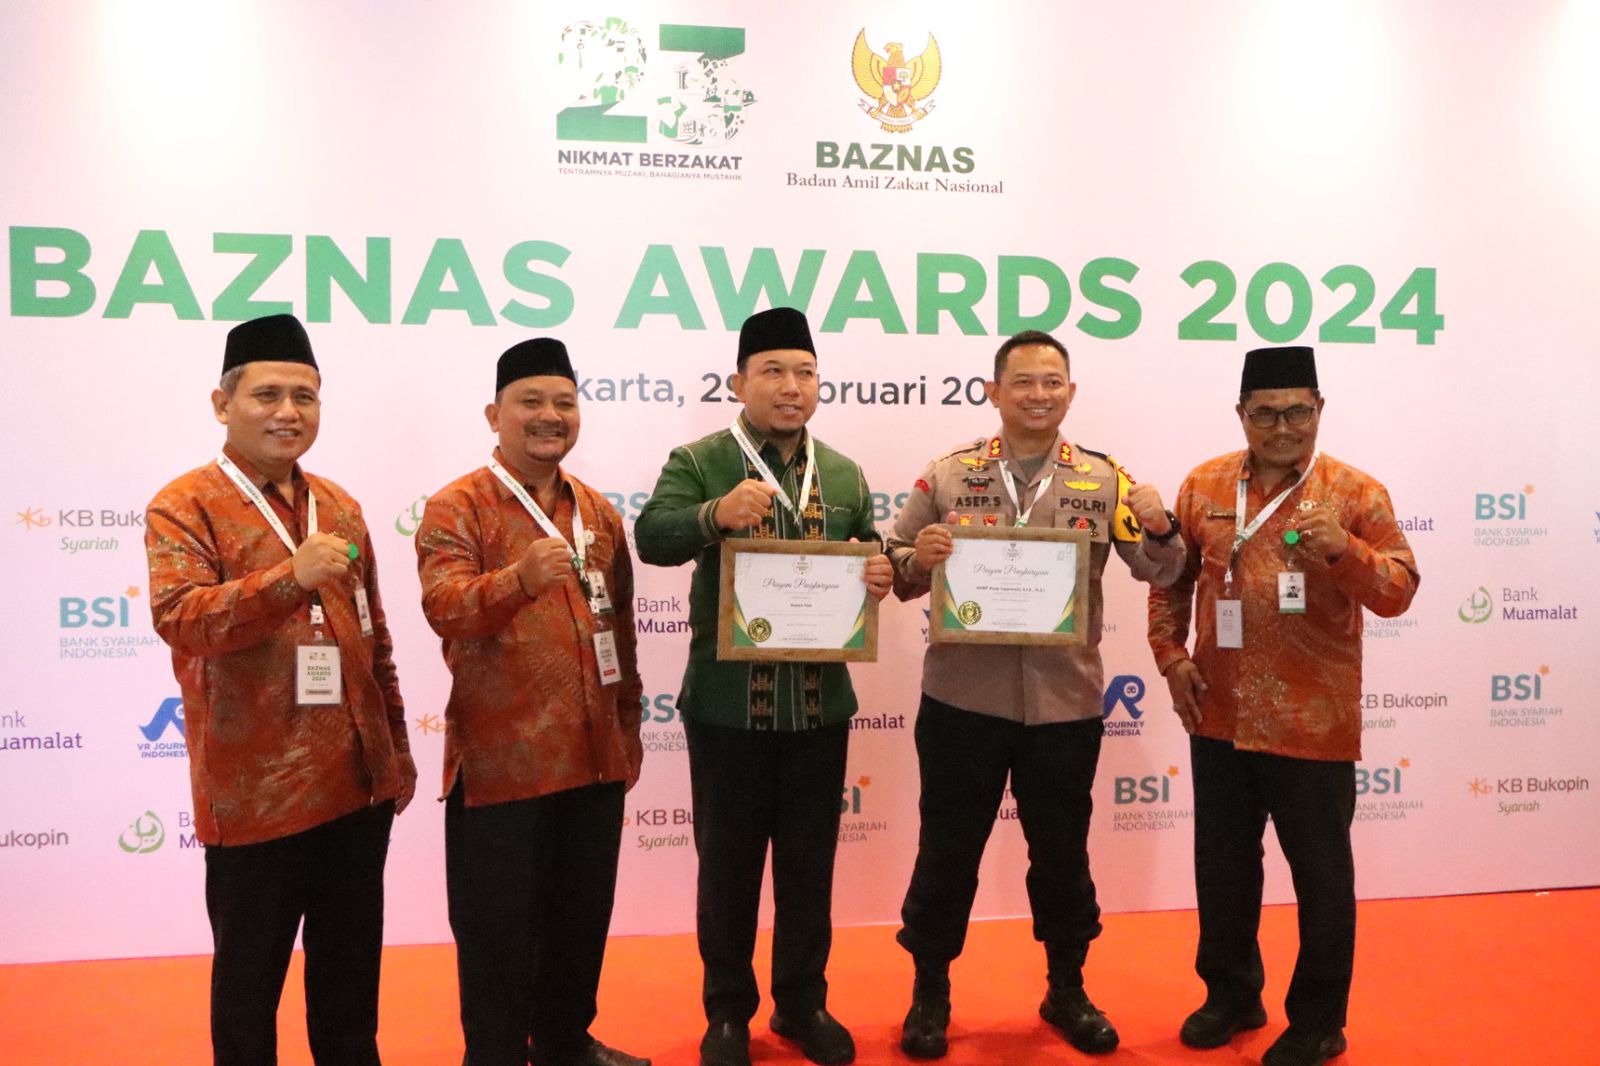 Usai menerima penghargaan Baznas Award 2024